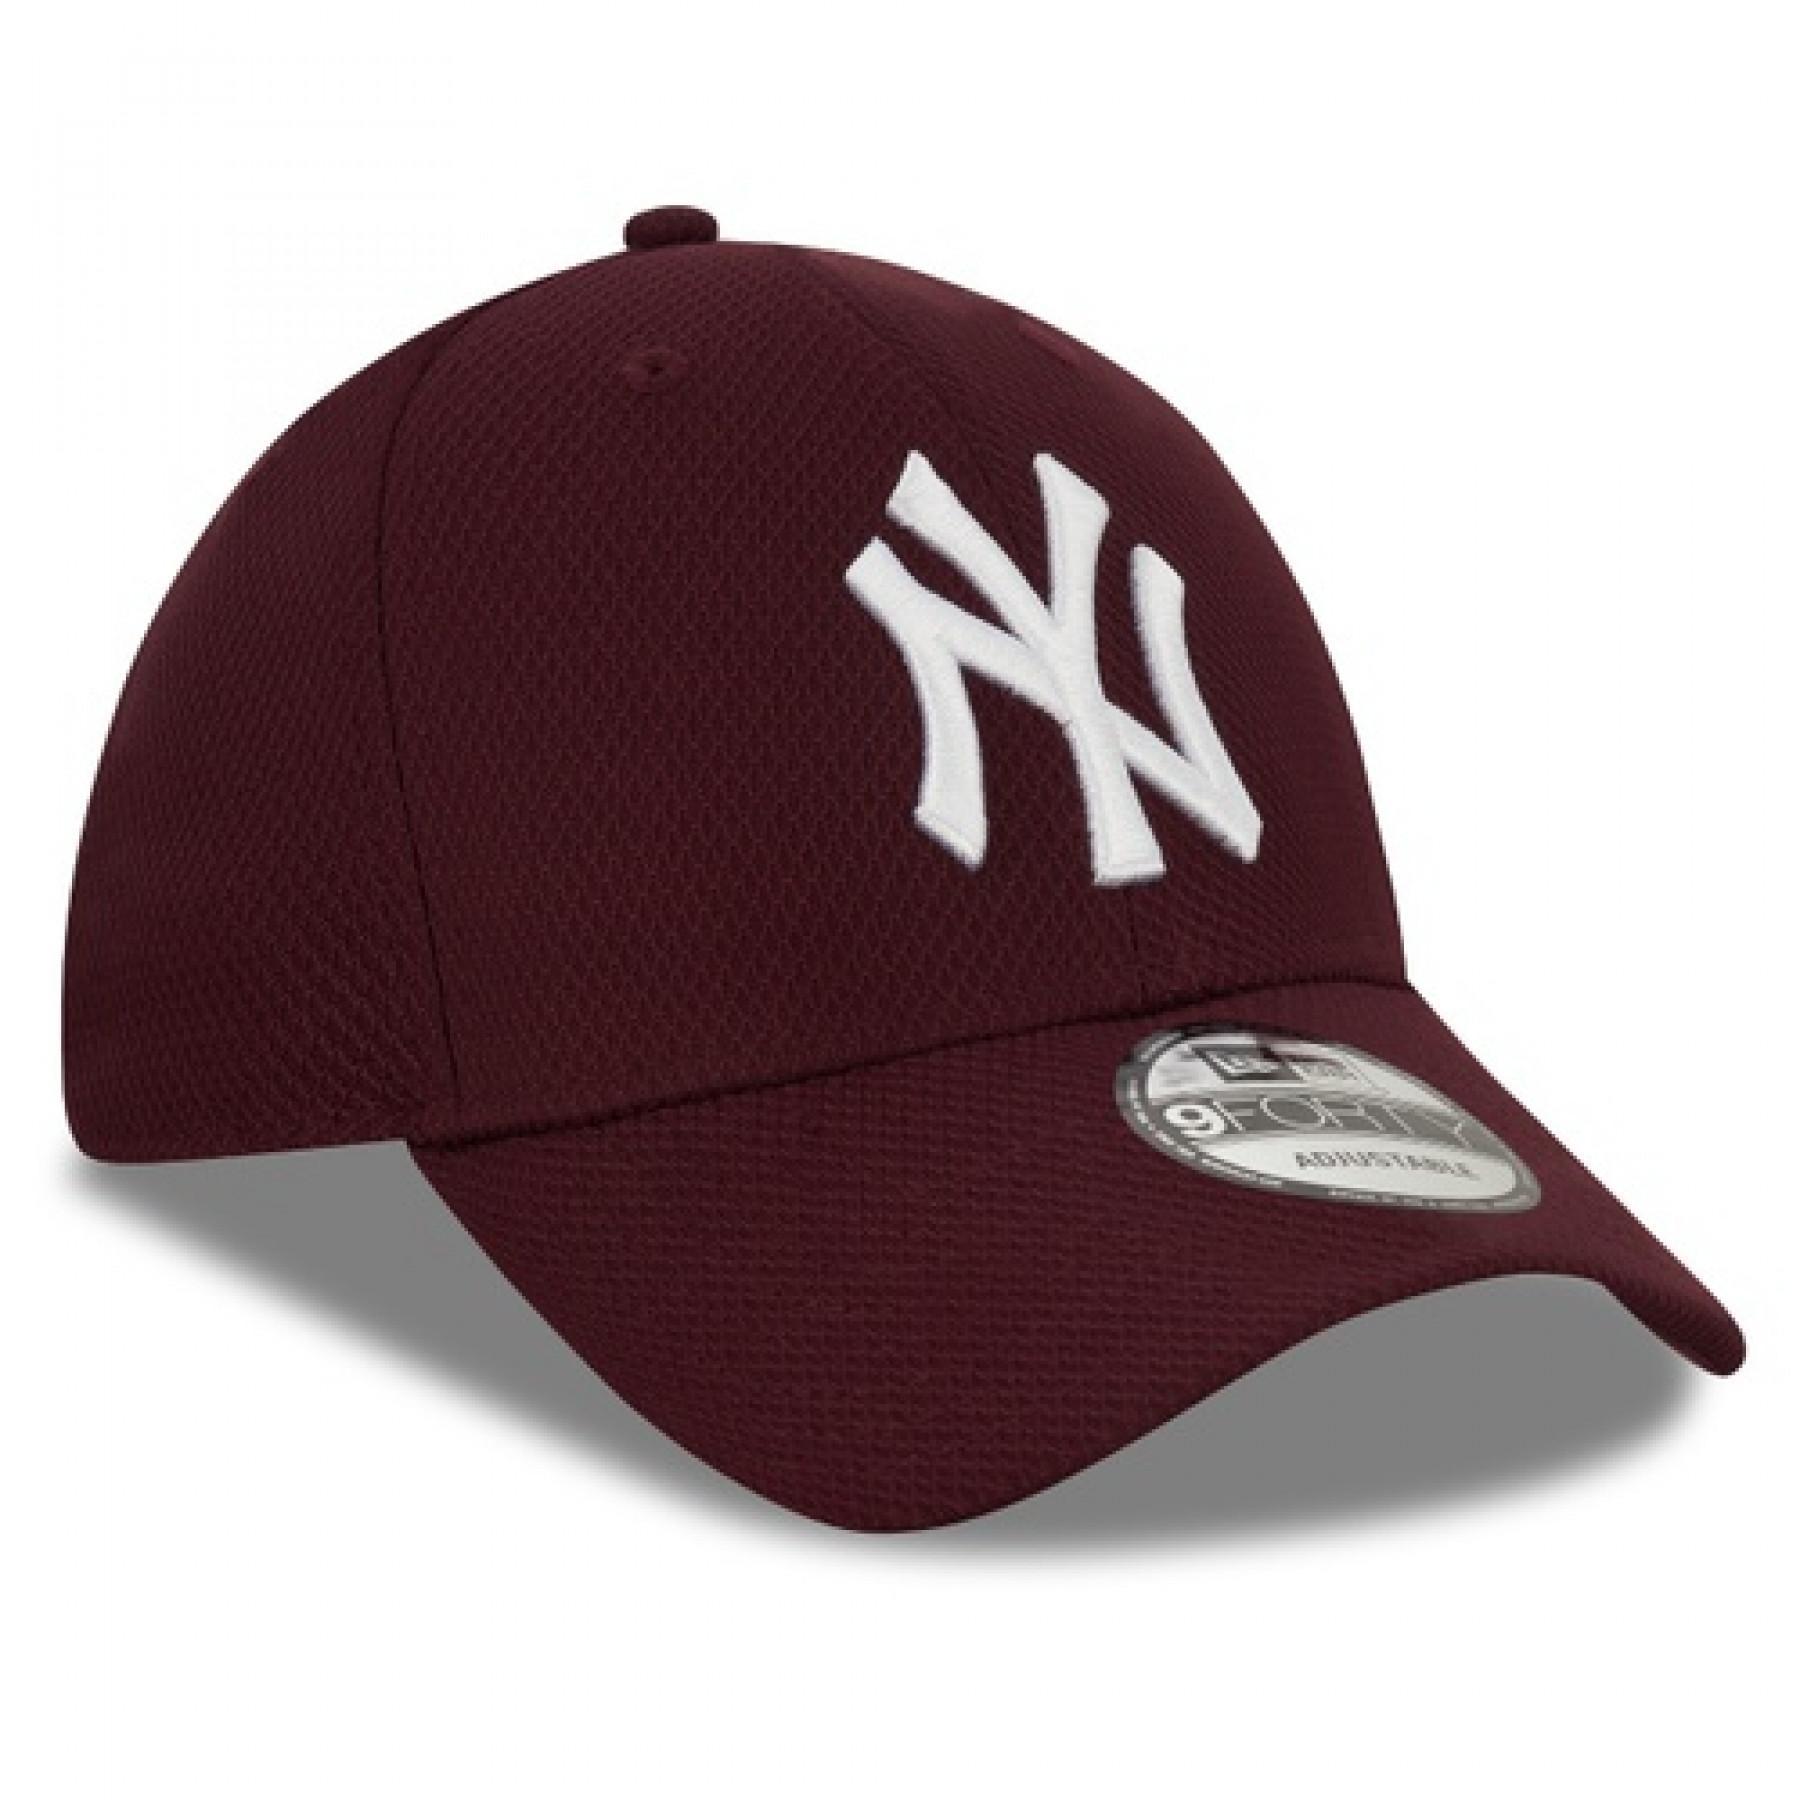 Kappe New Era Diamond Era 9forty New York Yankees Mrnwhi